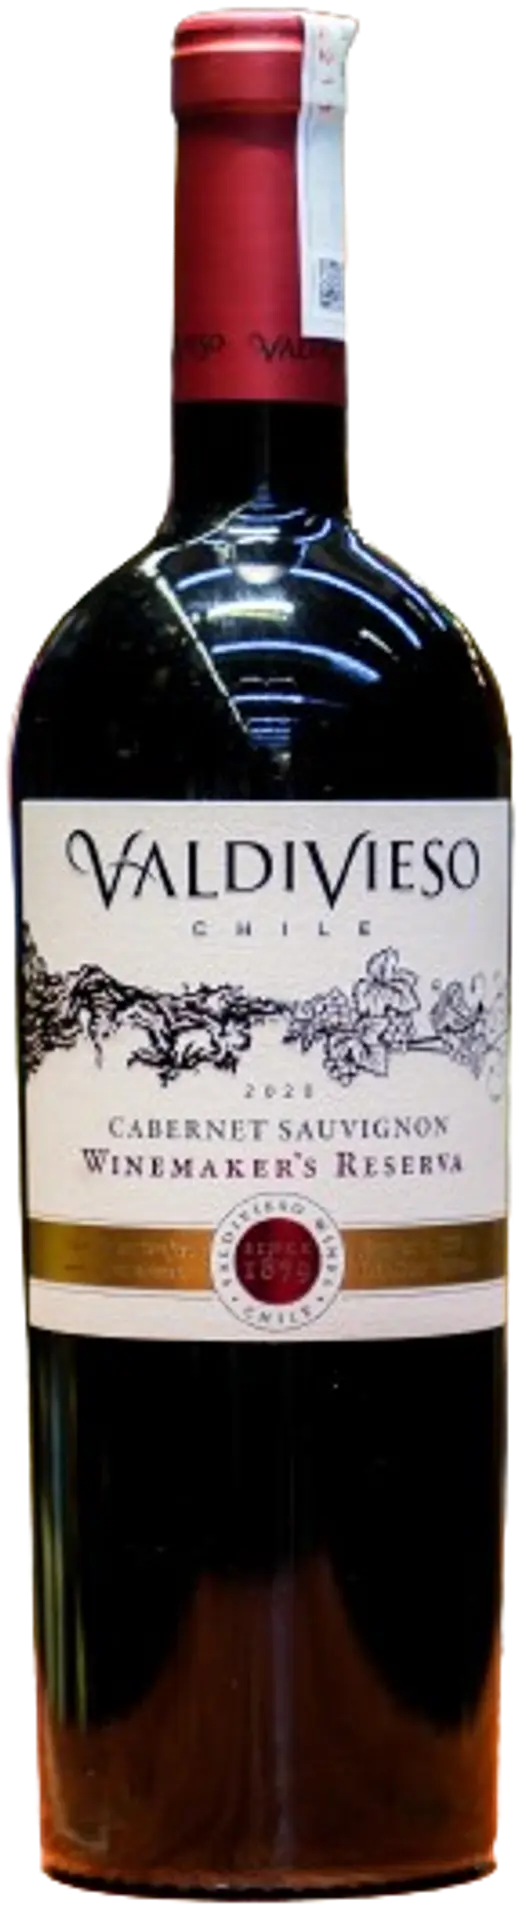 Valdivieso Winemaker Reserva Cabernet